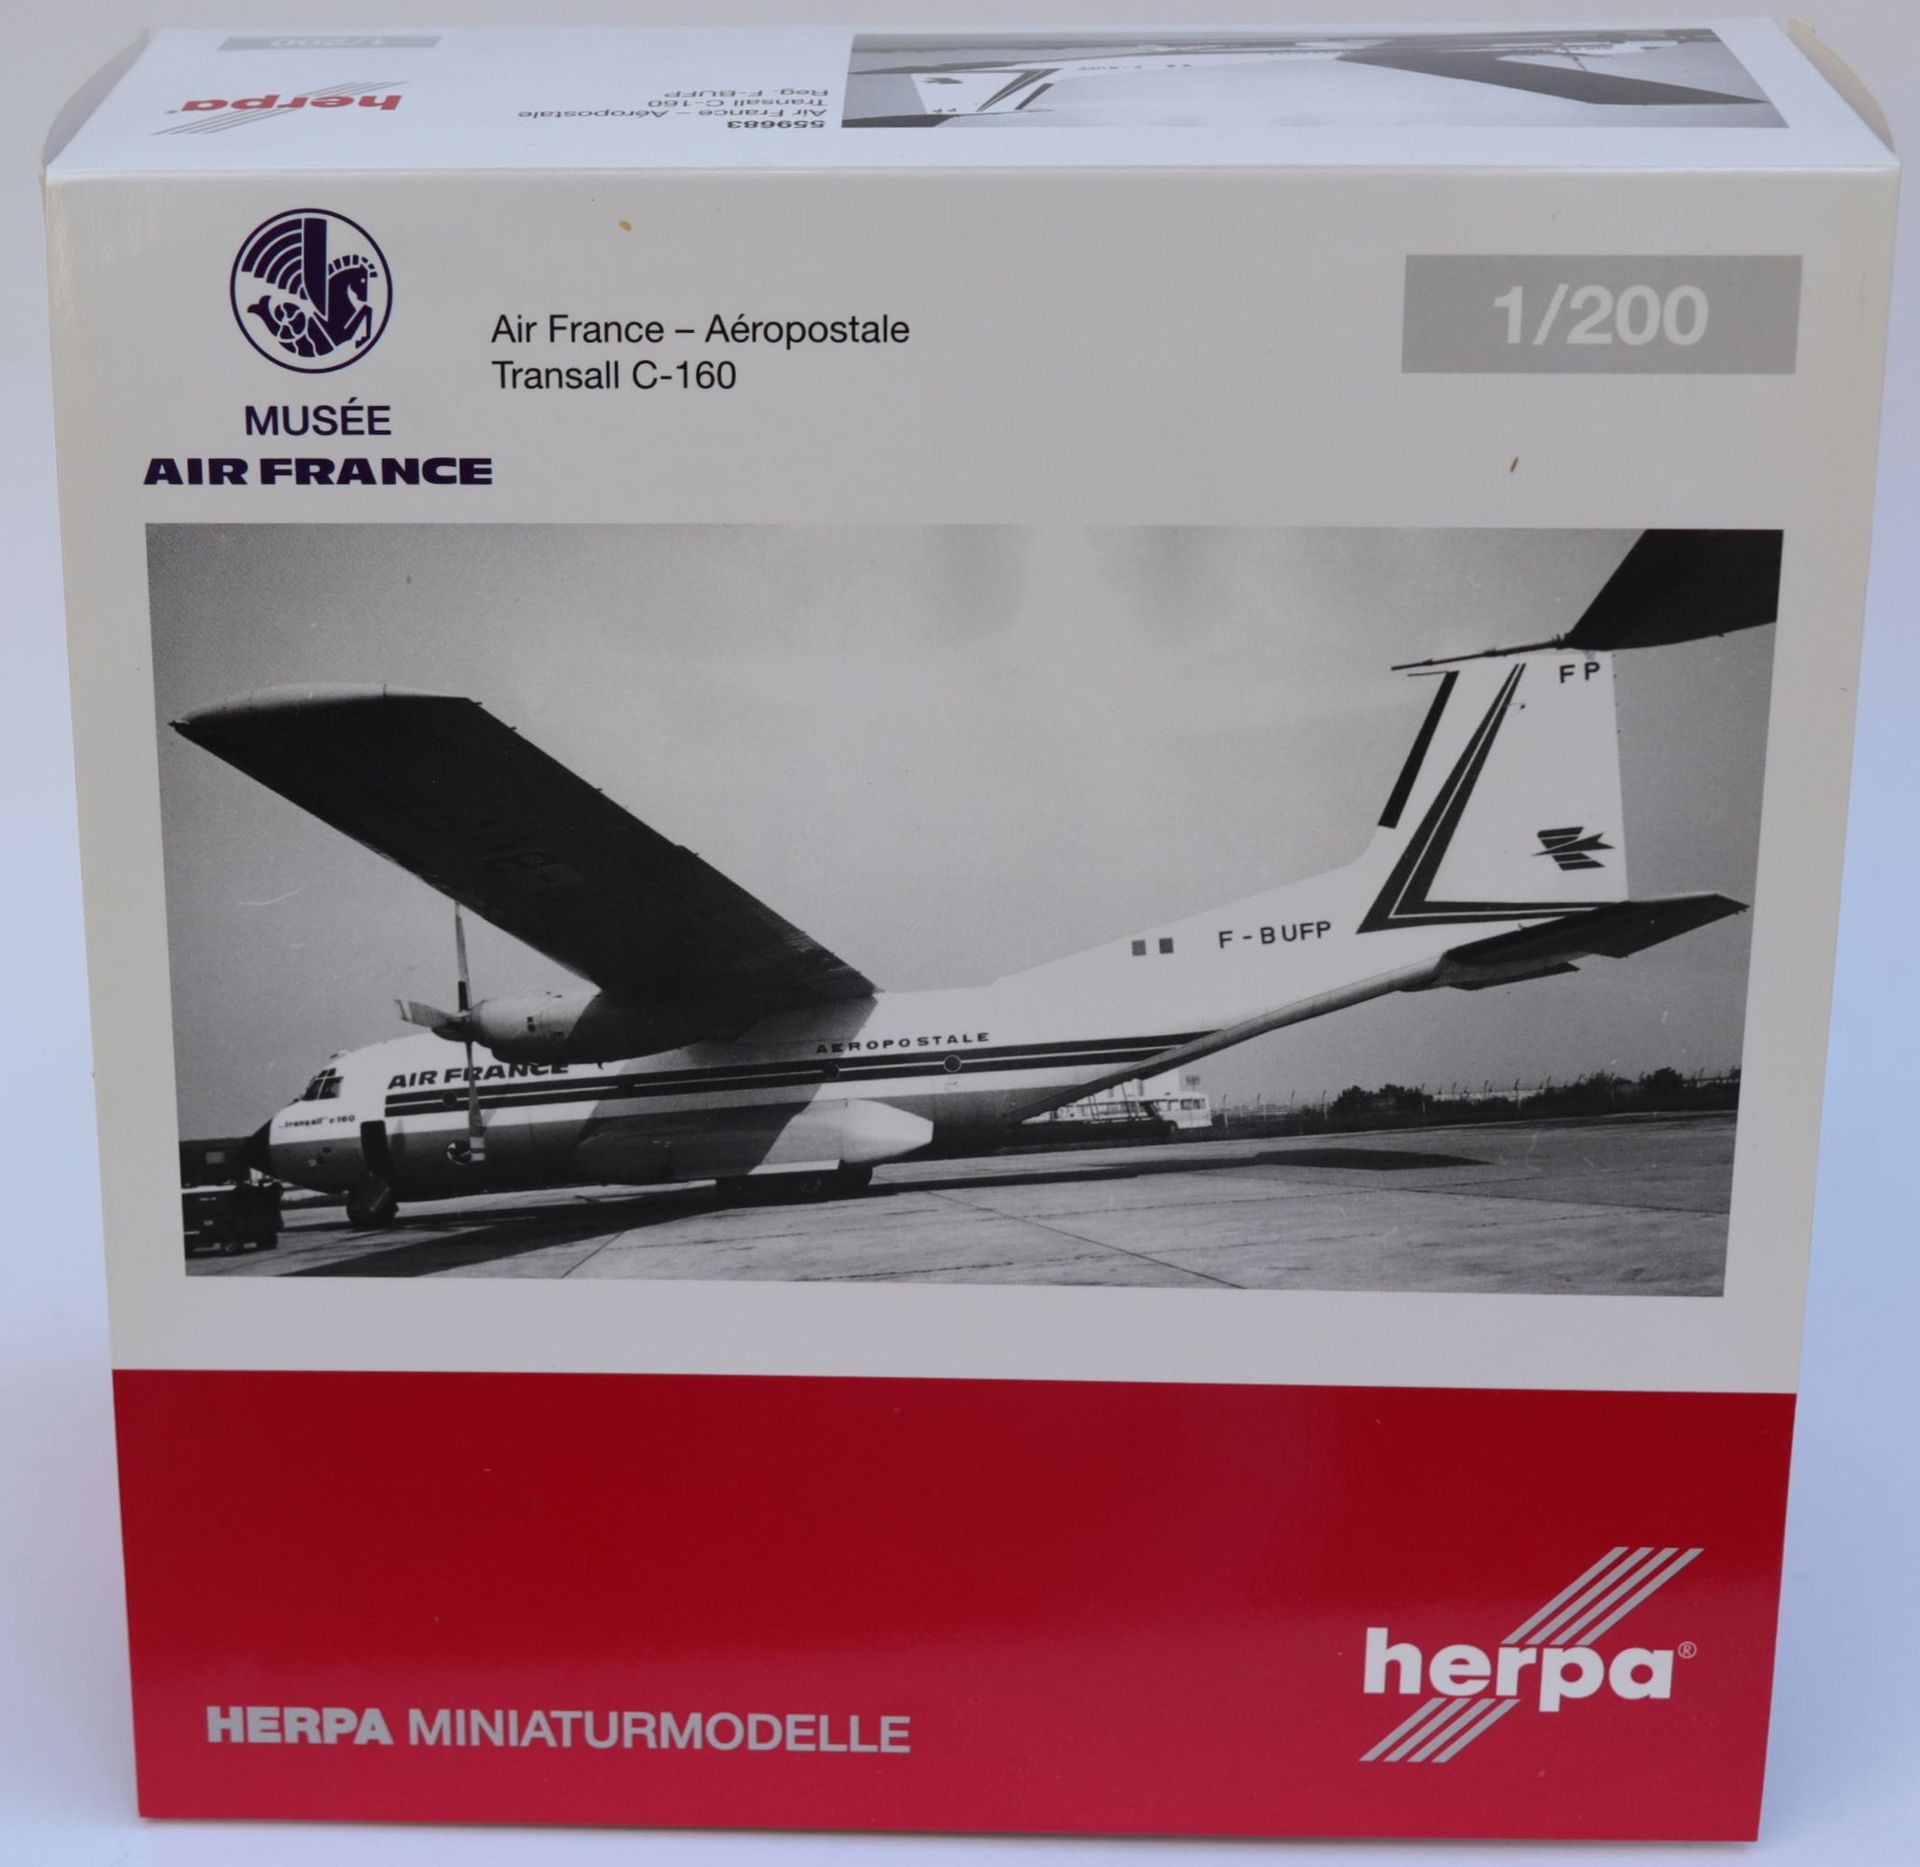 Null TRANSALL C-160 Aéropostale法国航空公司。

来自HERPA的压铸模型，1/200秒。

在原包装盒中的泡罩下。

20厘米×&hellip;